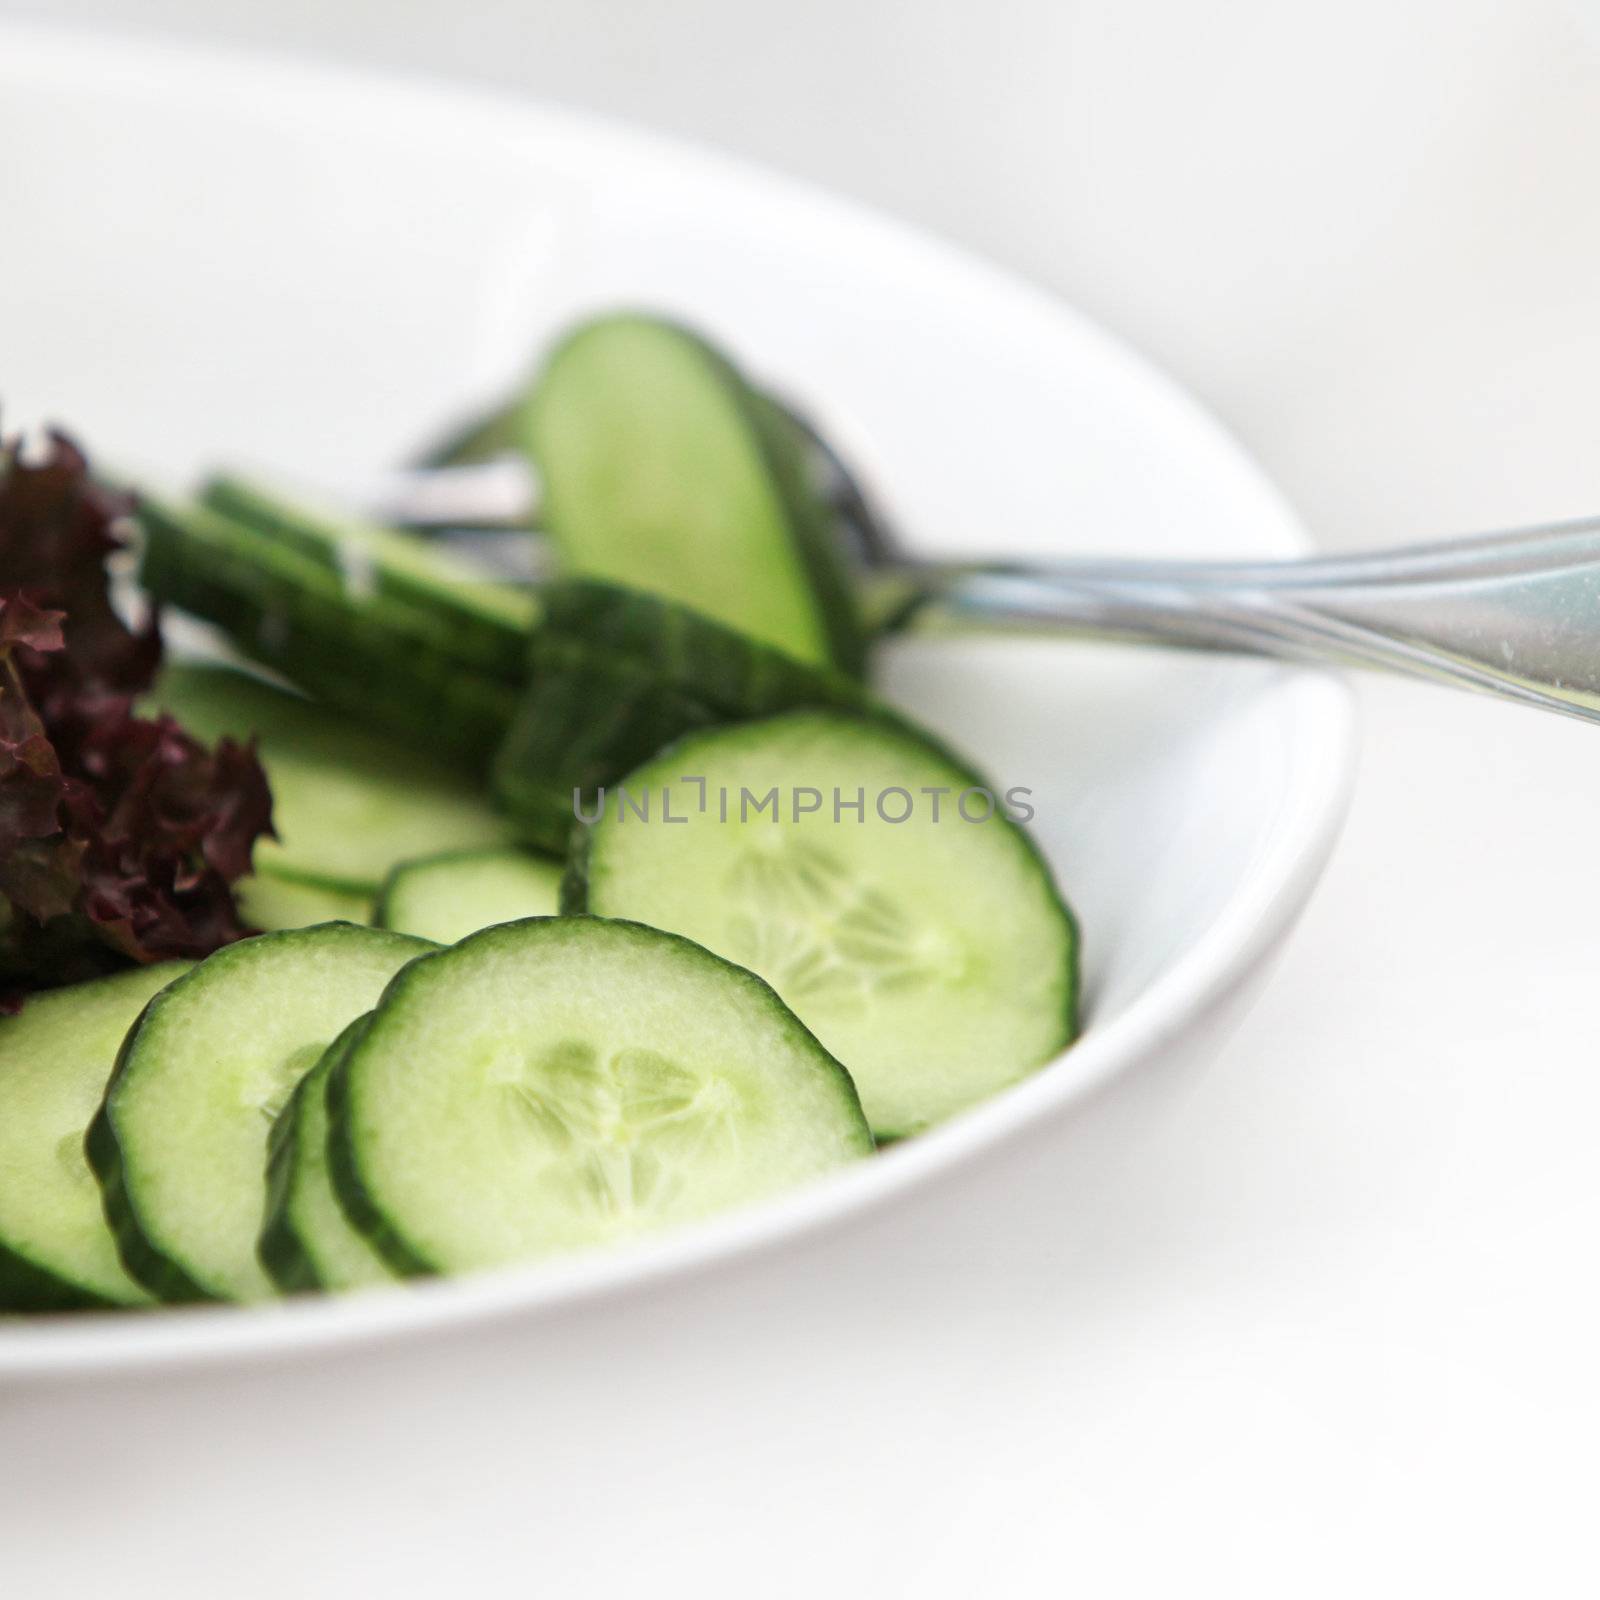 Fresh cucumber salad - close-up